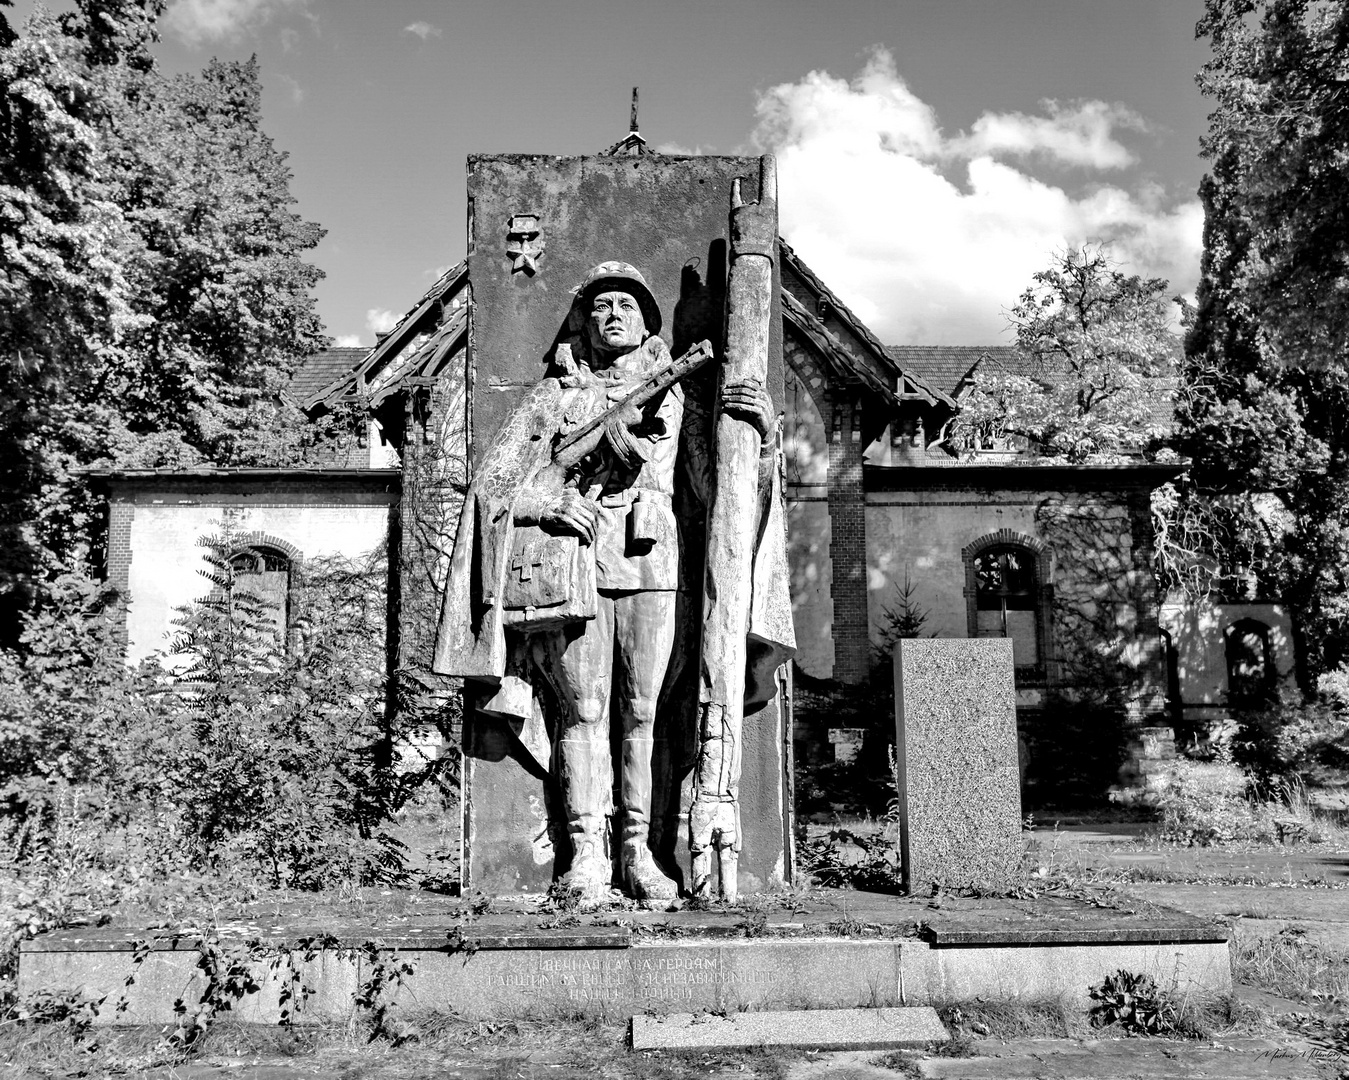 Heilstätten Beelitz